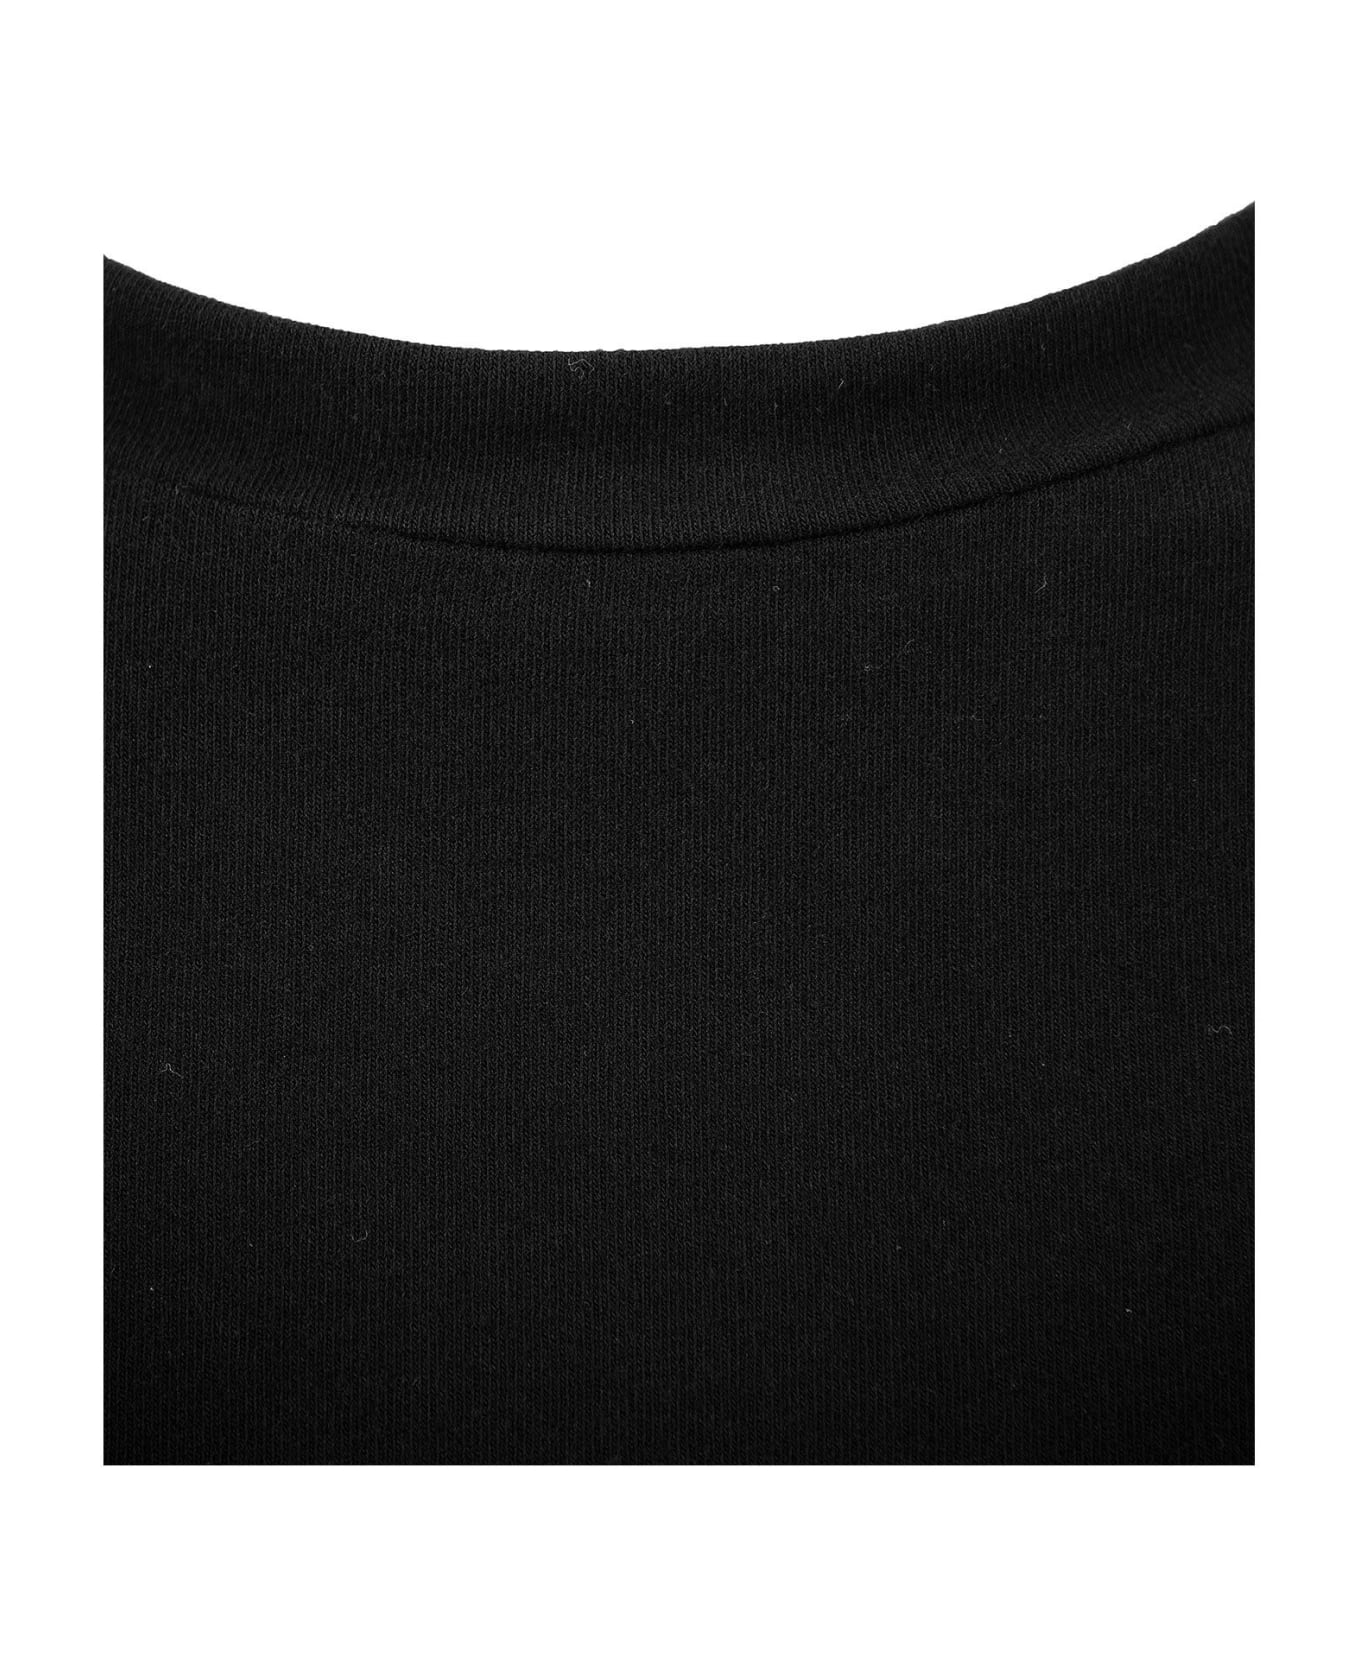 Majestic Filatures Slim Crew Neck T-shirt - Black